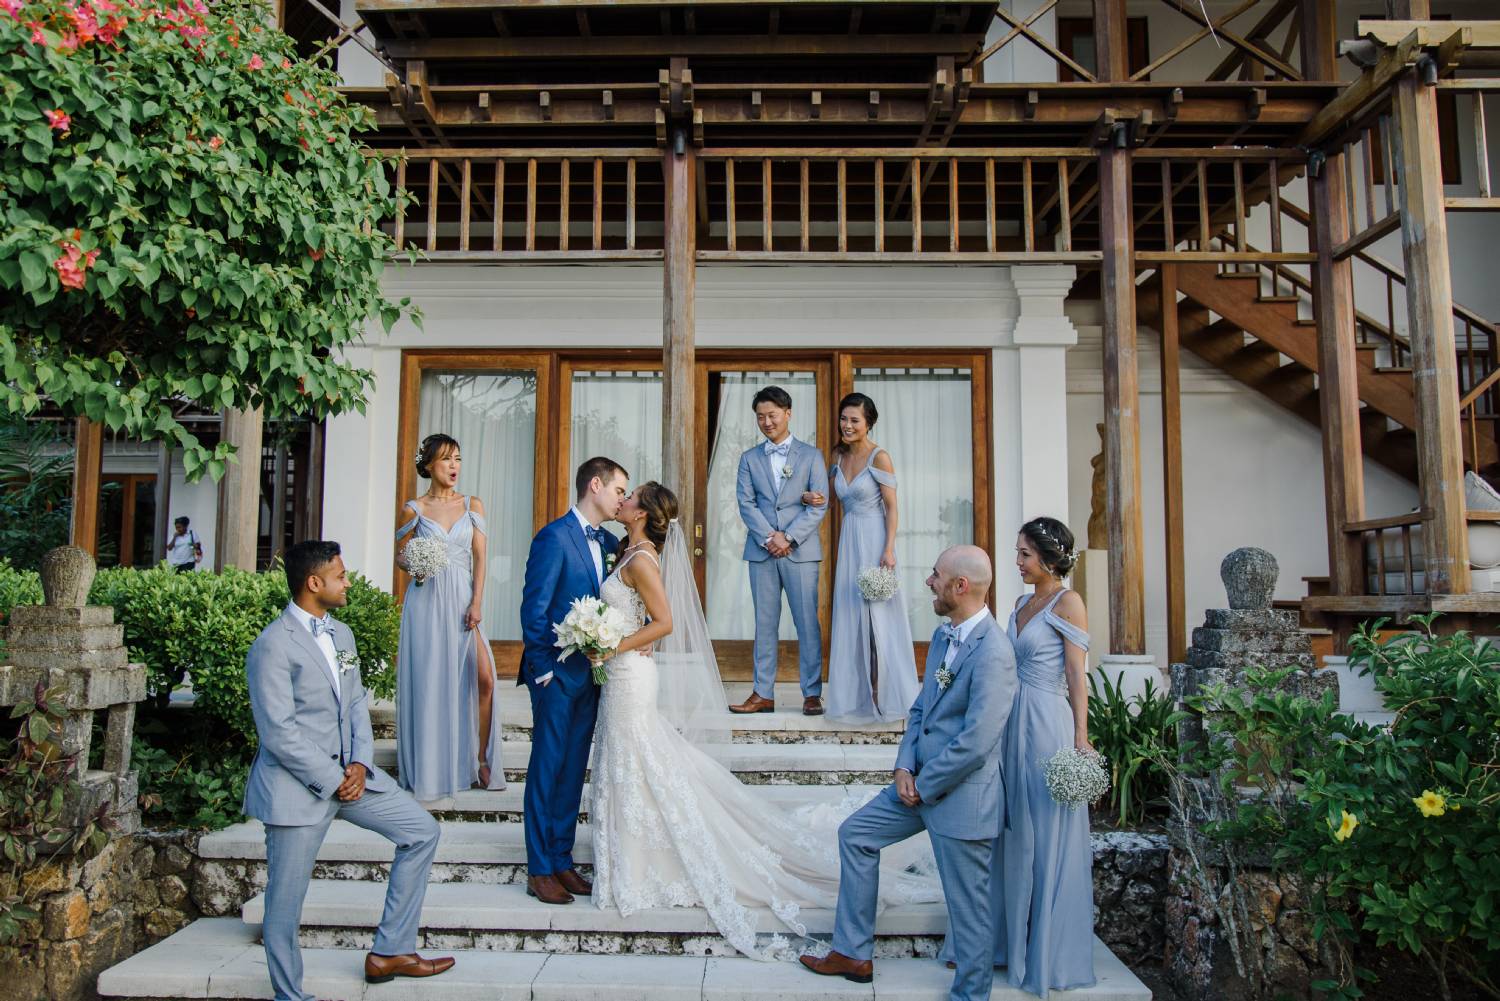 Rachel & Omid gorgeous vintage-rustic wedding at beautiful villa in Bali 31